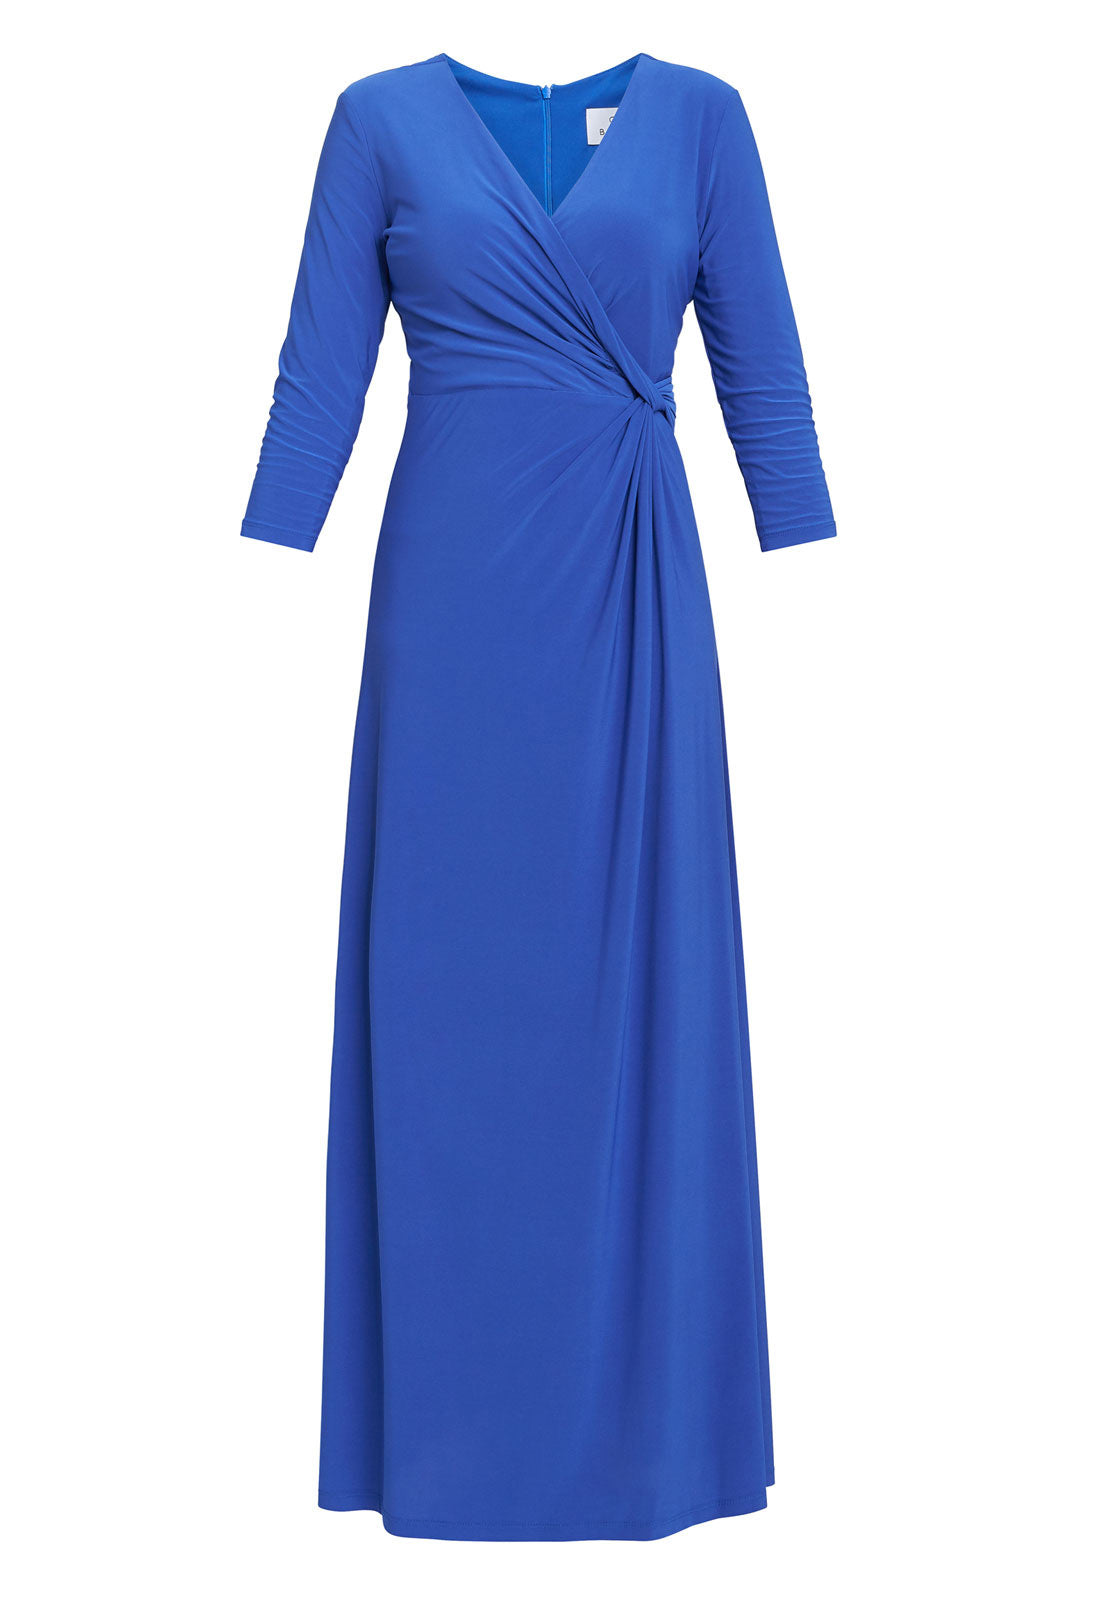 Gina Bacconi Blue Celine Jersey Wrap Maxi Dress